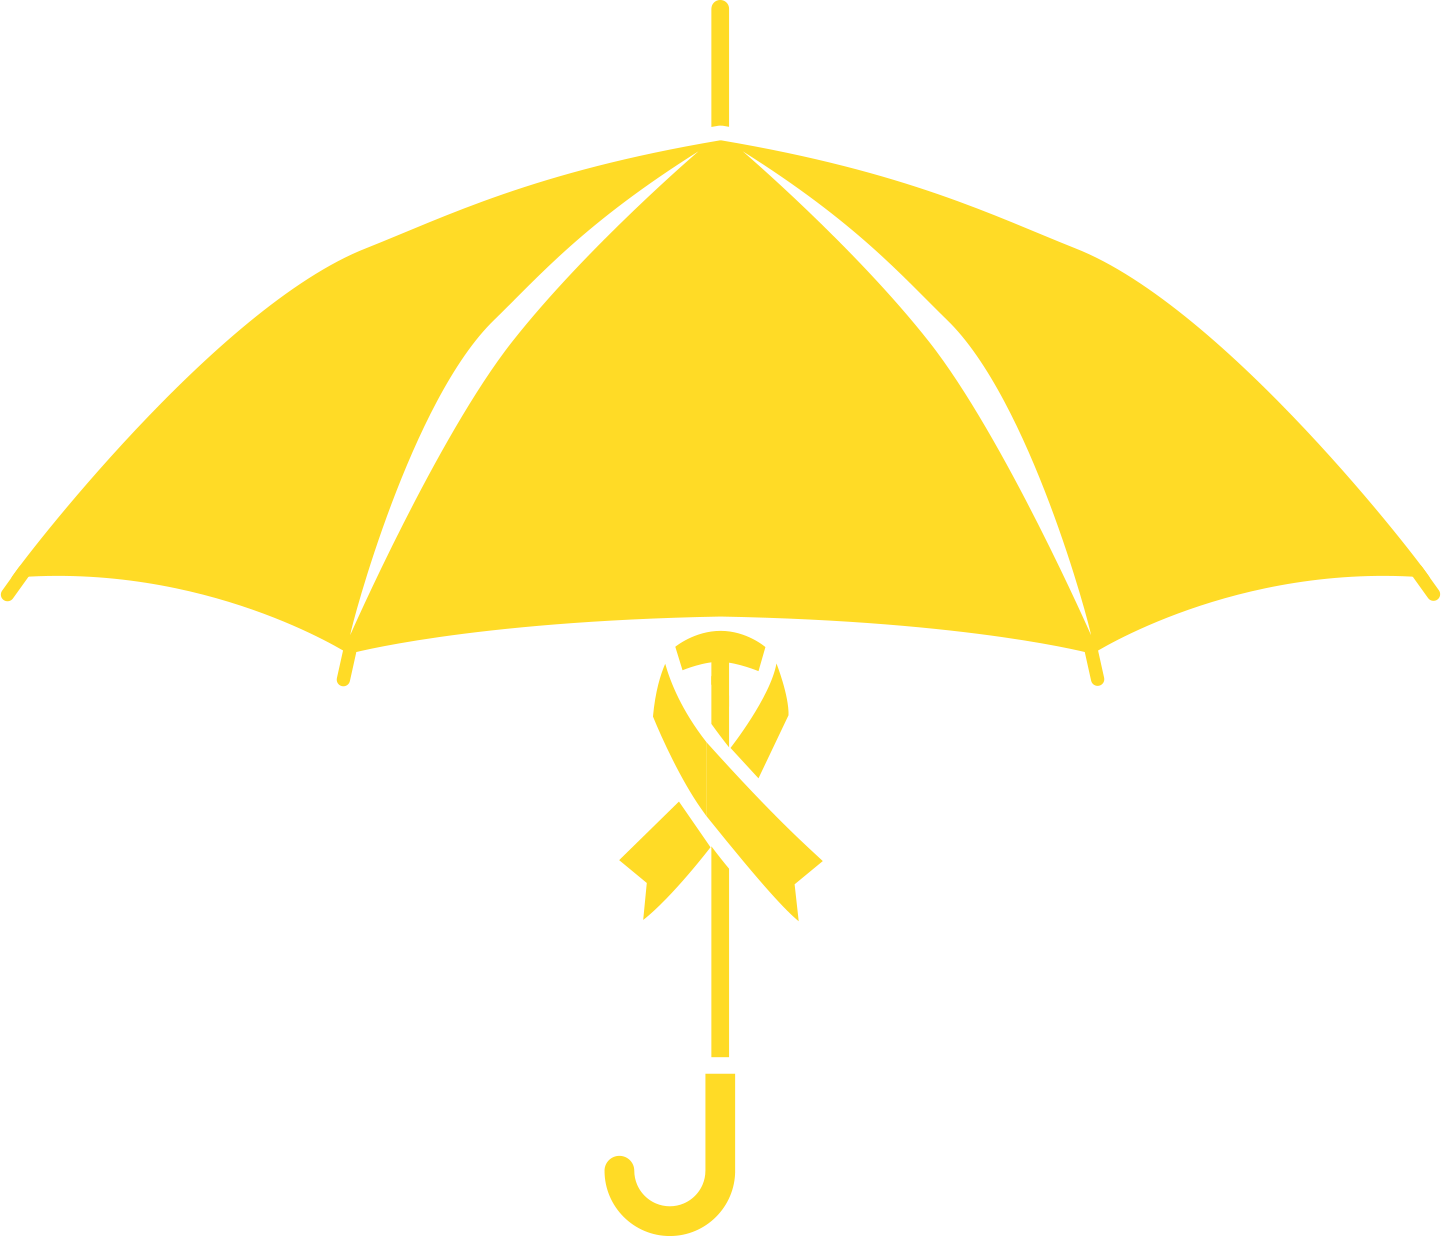 Umbrella Hong Kong Umbrella Movement Yellow Black Background Ribbon Minimalism Digital Art 1441x1236